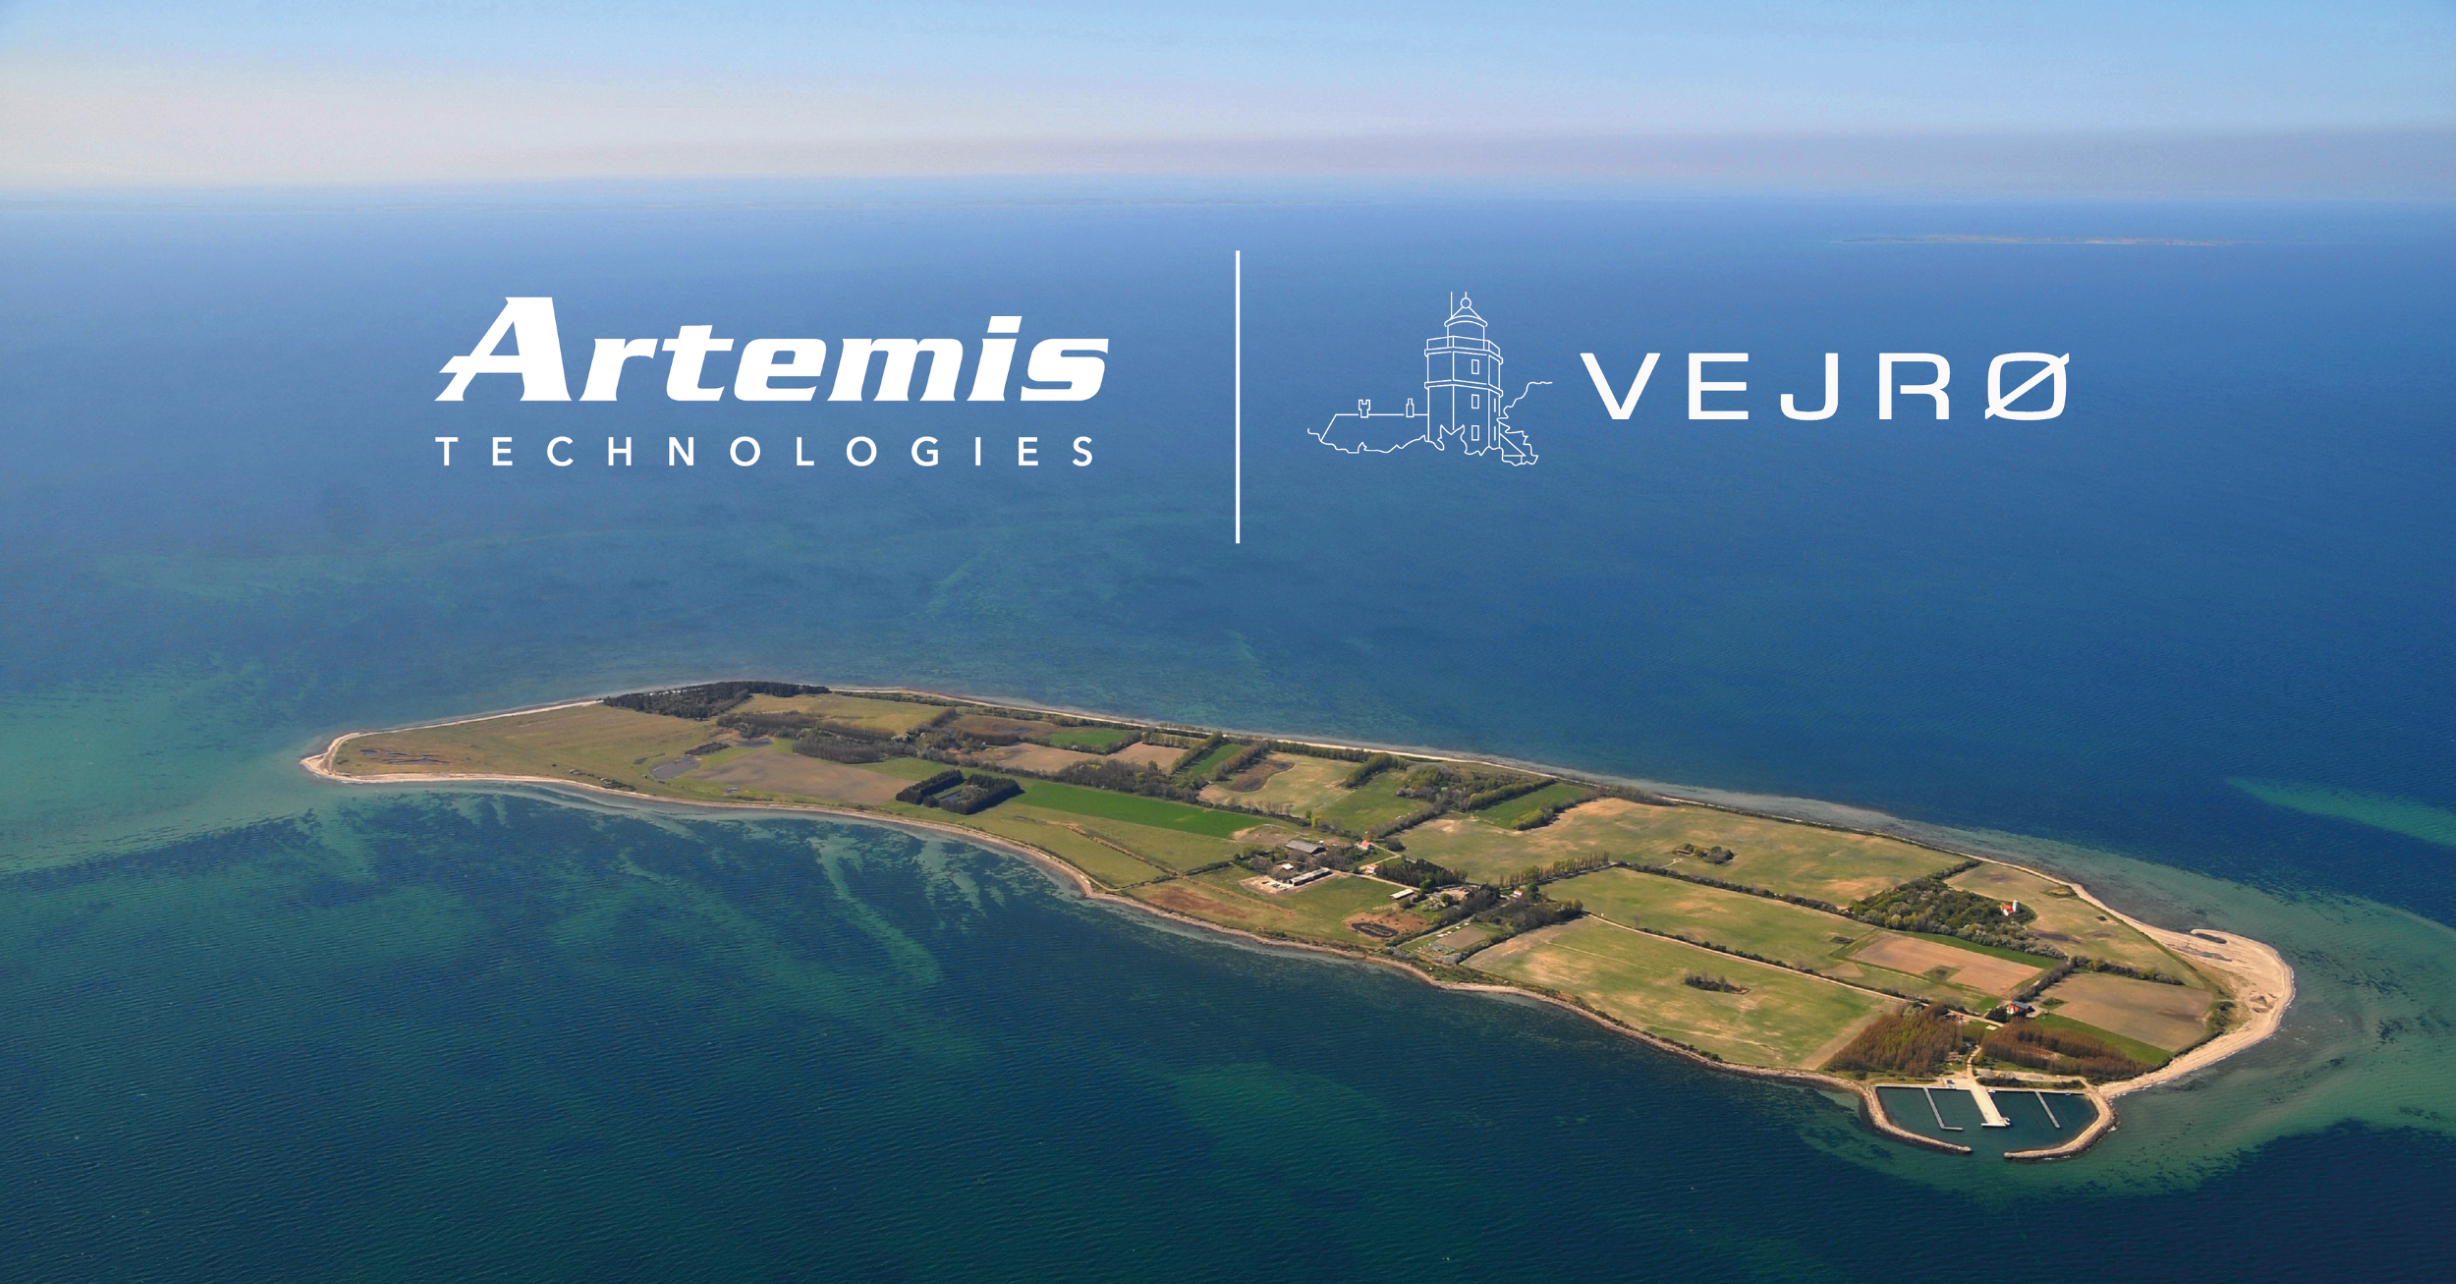 Image of Denmark Island with Artemis Technologies logo and Verjo logo